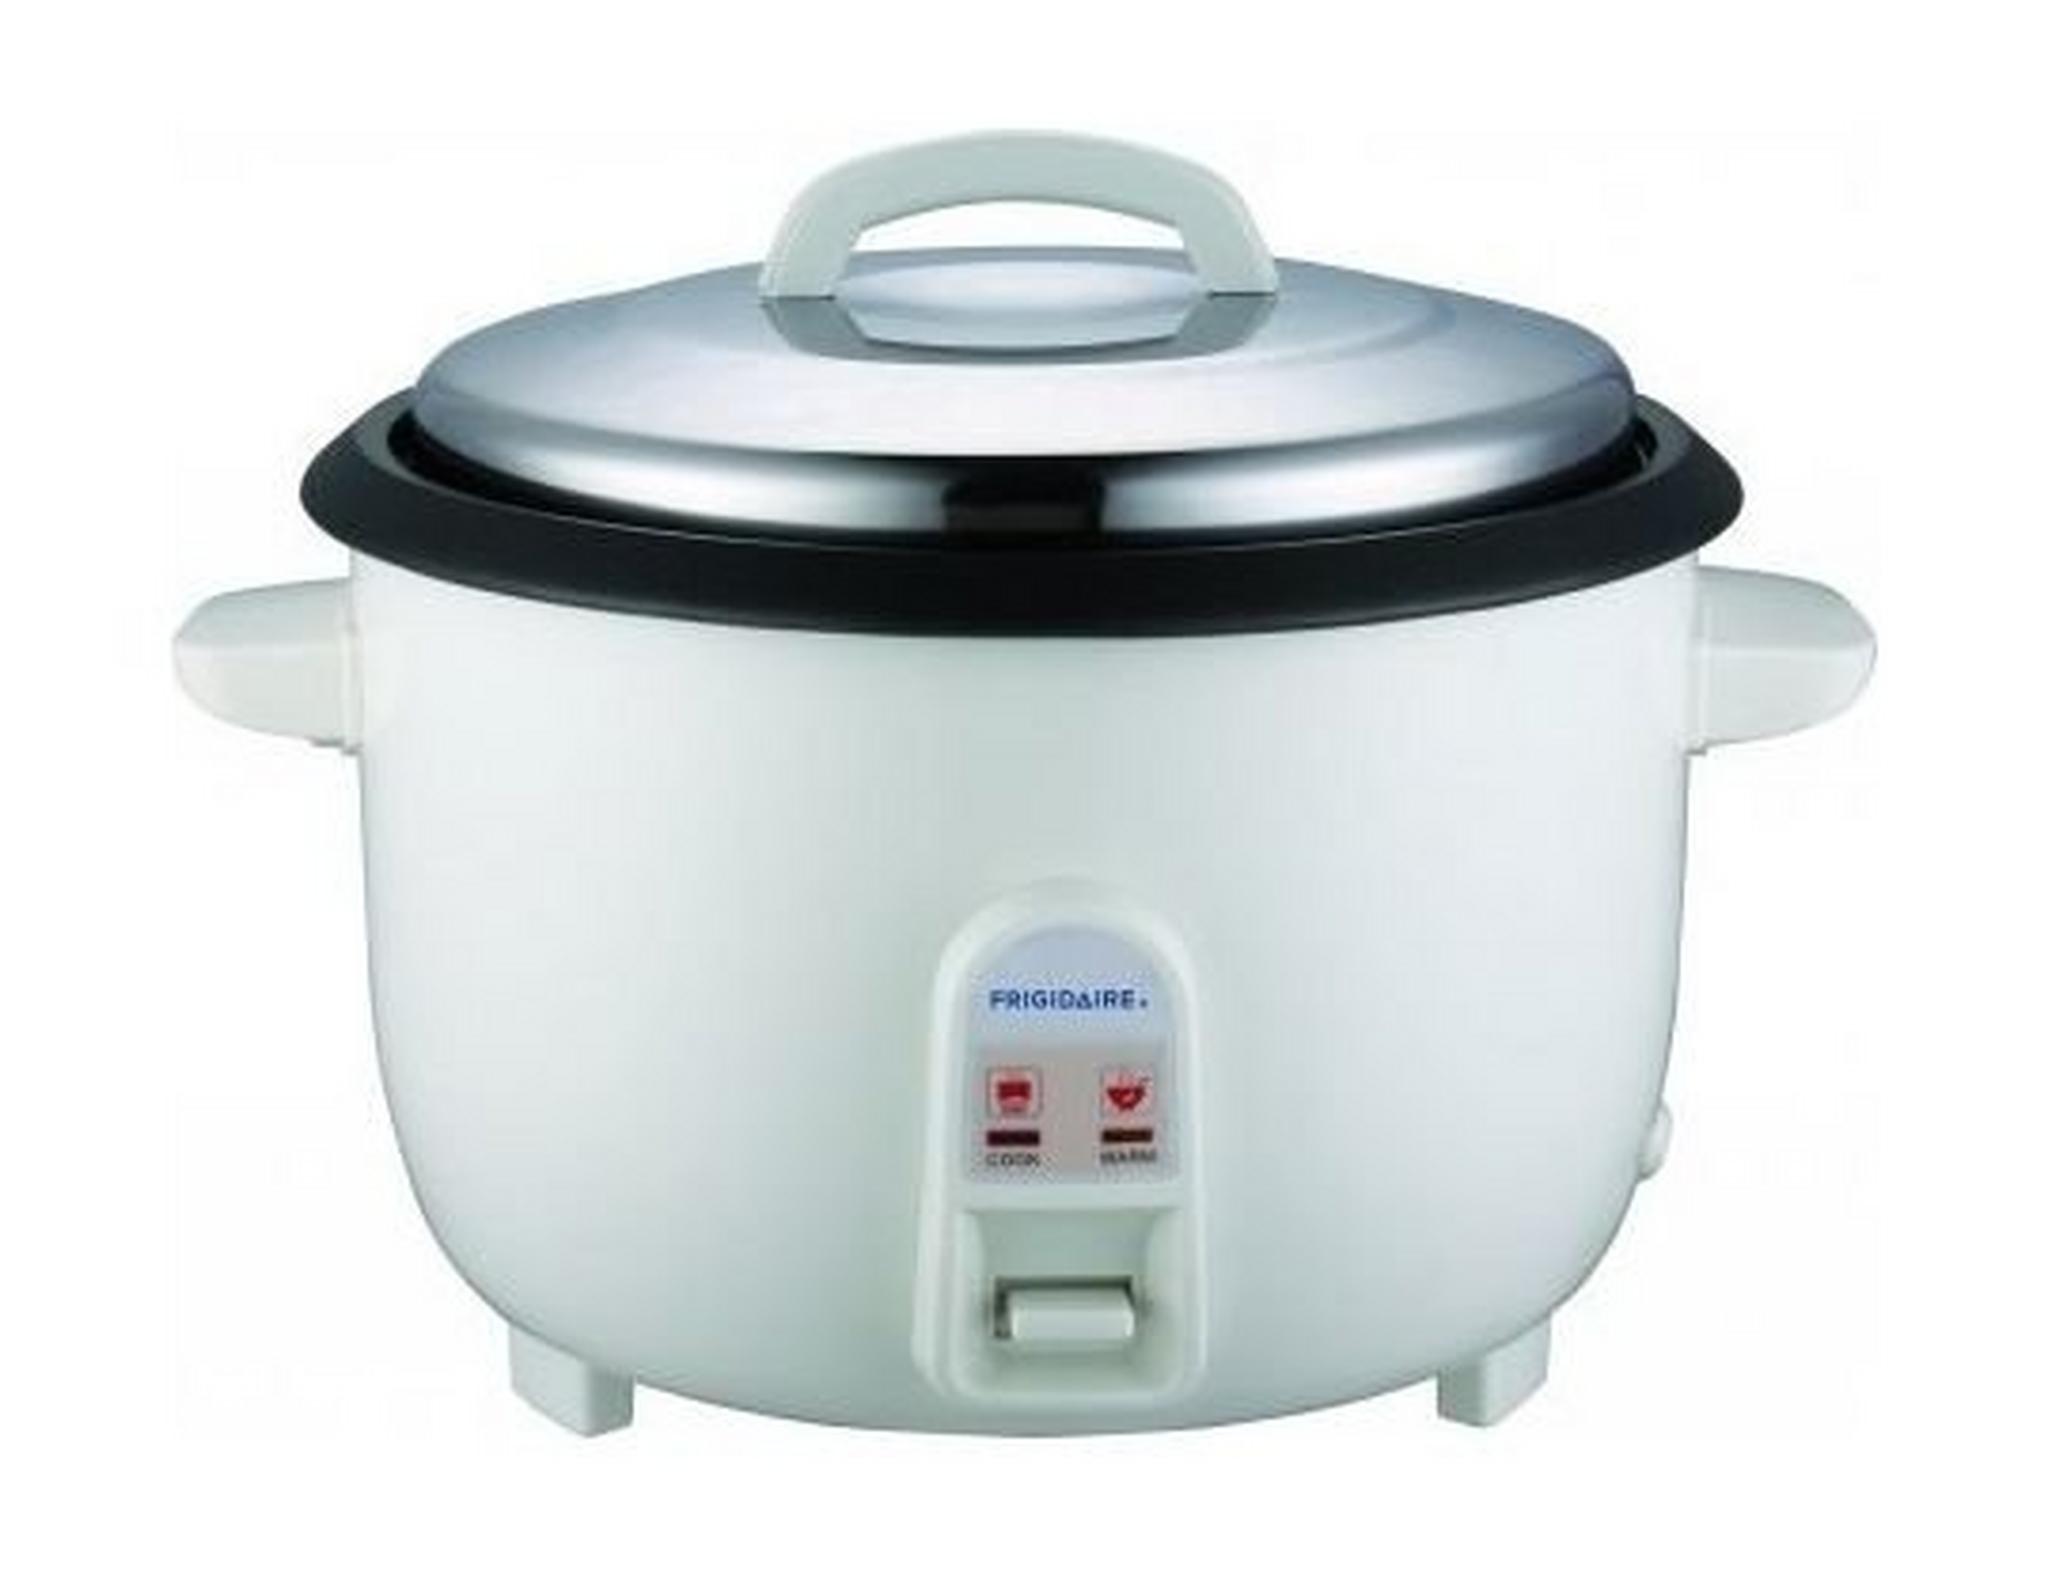 Frigidaire Rice Cooker - 1600W 4.2L (FD8019)